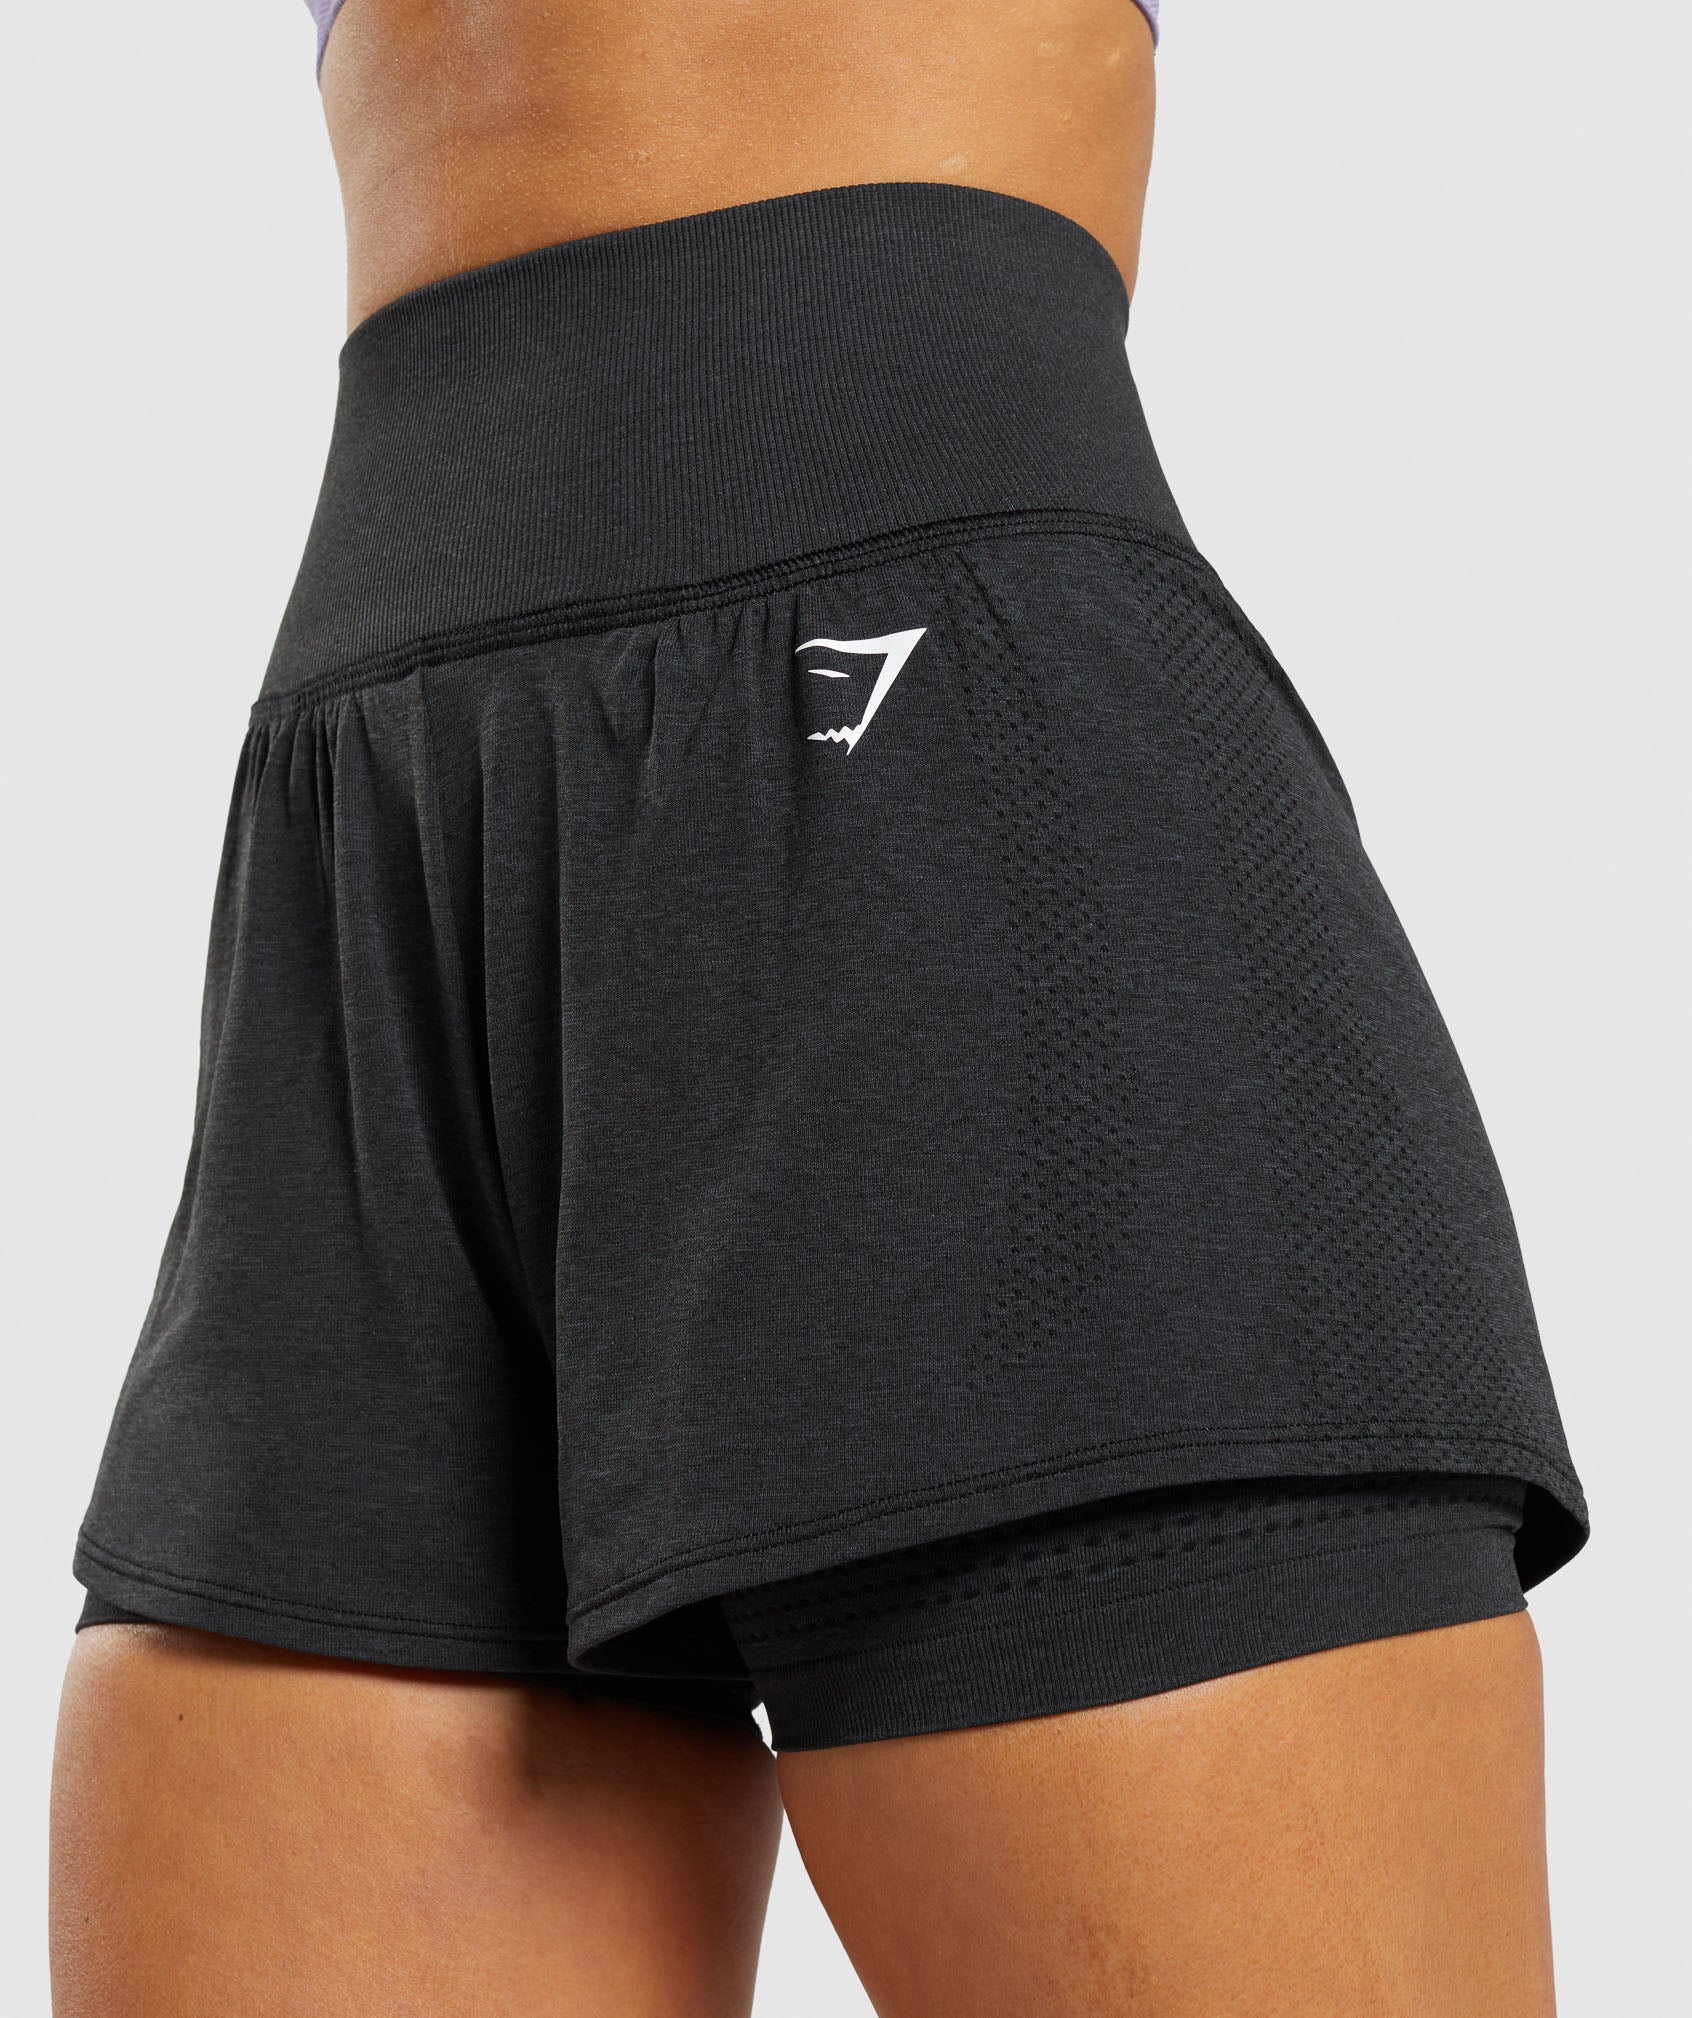 Vital Seamless 2.0 2-in-1 Shorts in Black Marl - view 5